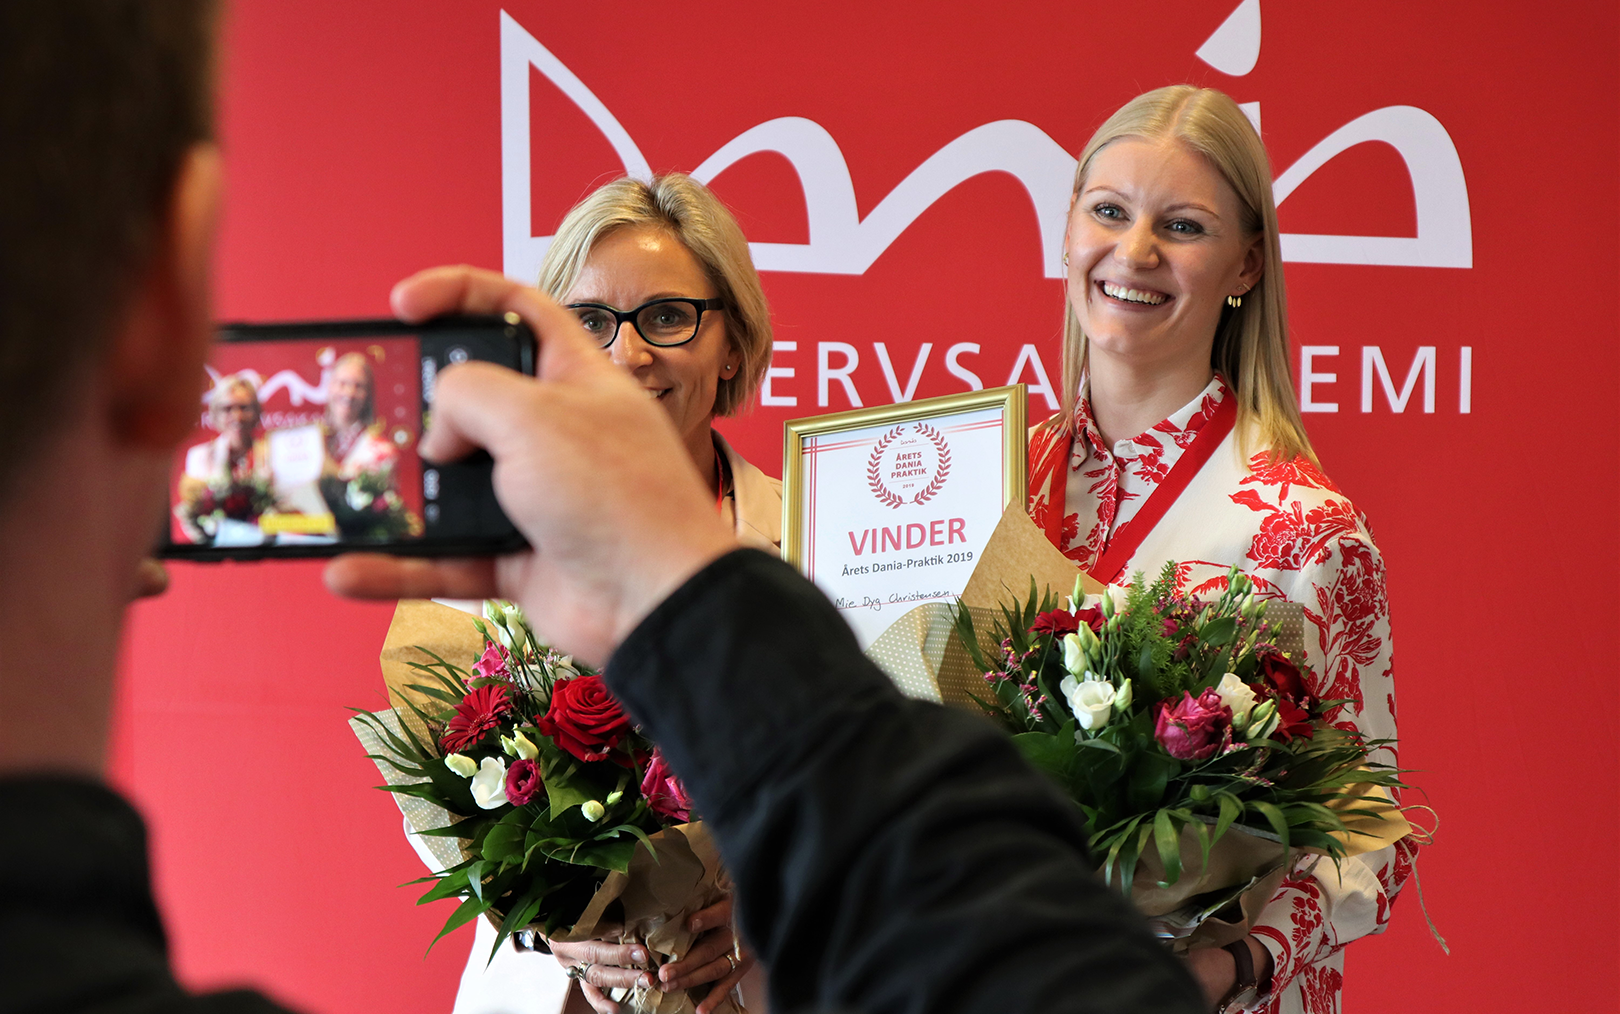 Centrum Skinne En god ven Nybolig Palle Ørtoft vinder praktikkonkurrence